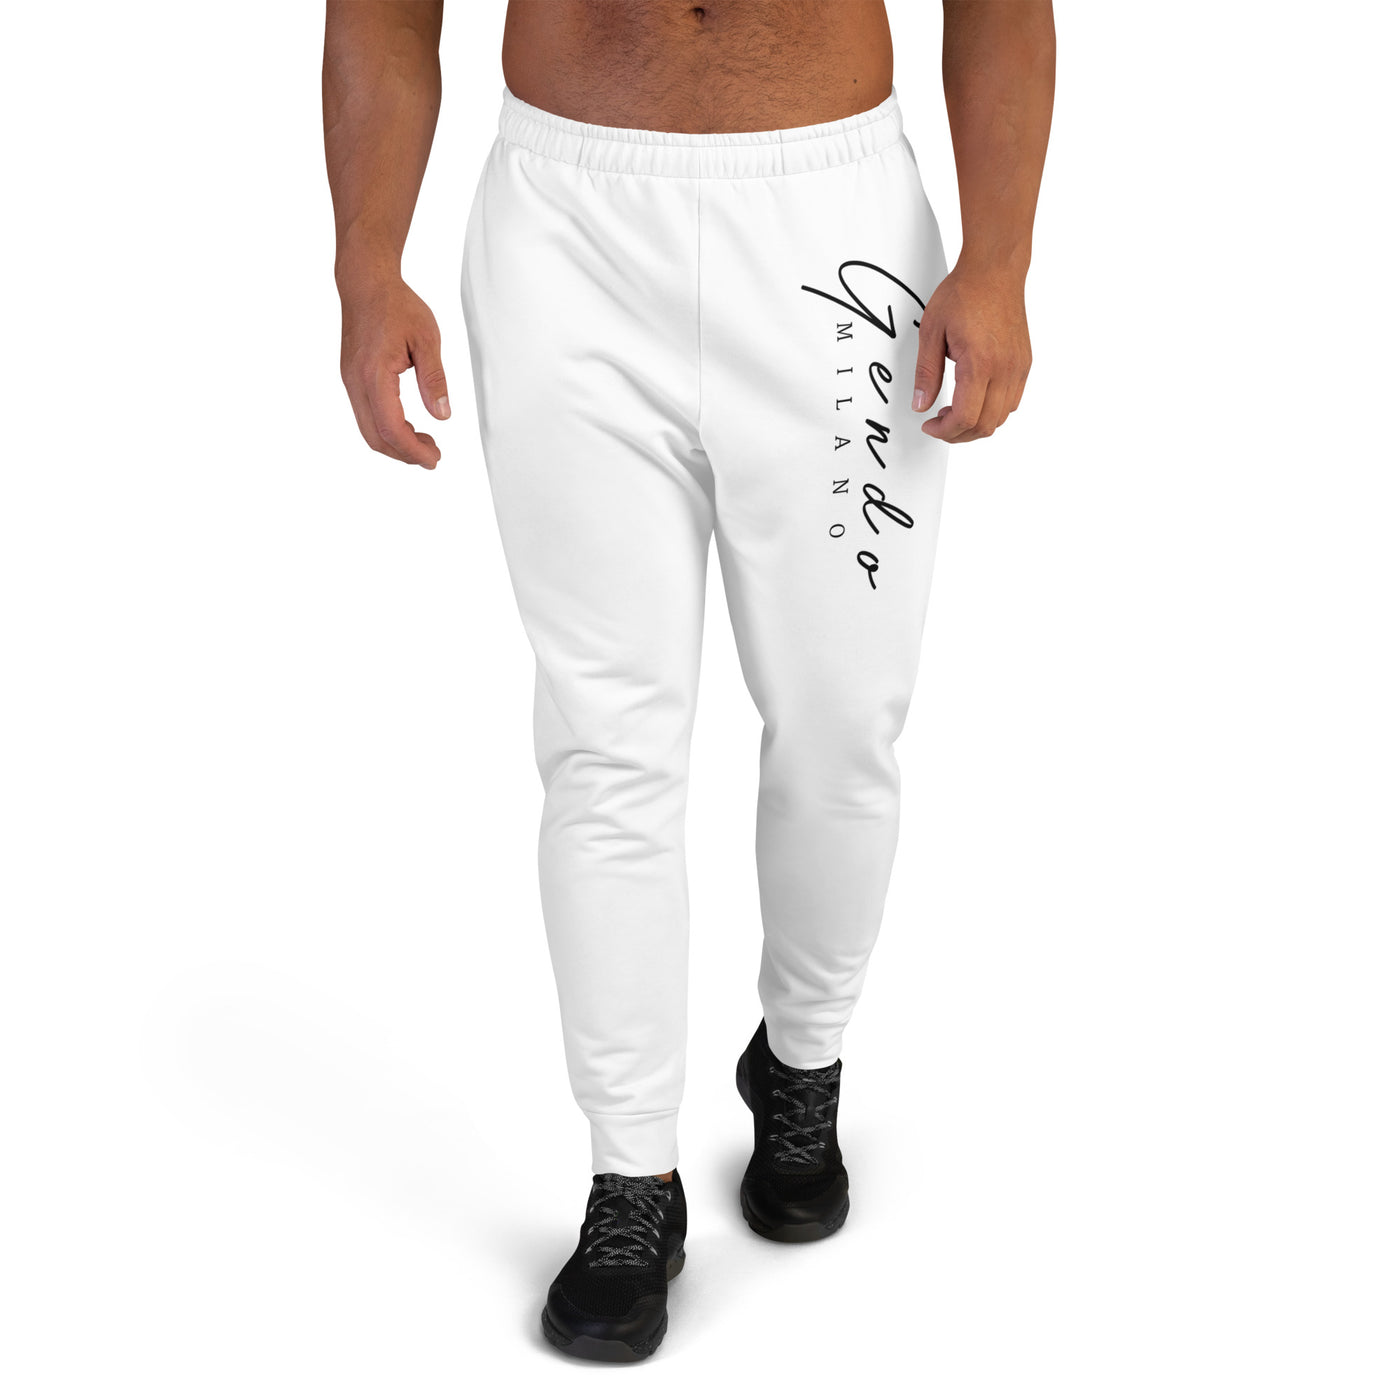 Gendo Milano White Jogging Pants